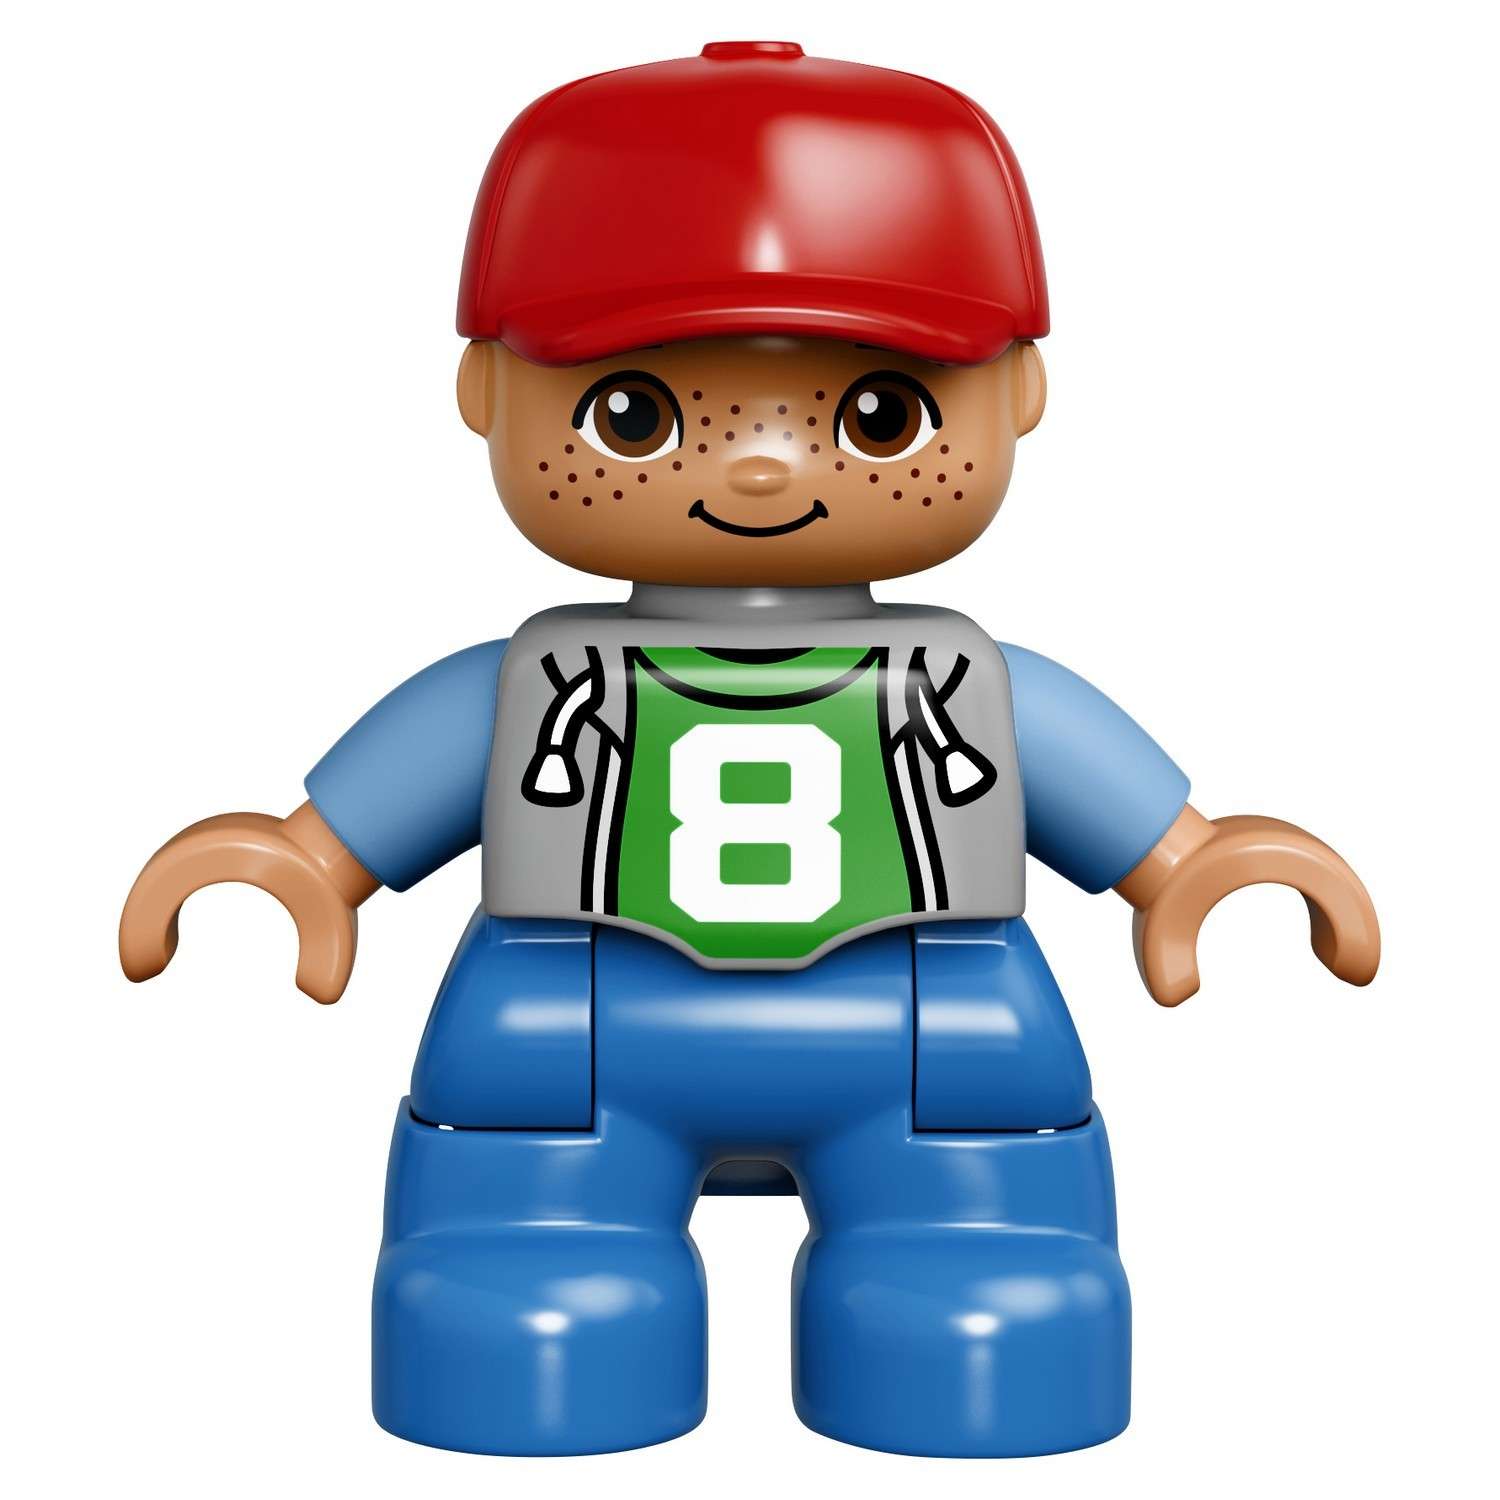 Конструктор LEGO DUPLO Town Детский сад (10833) - фото 13